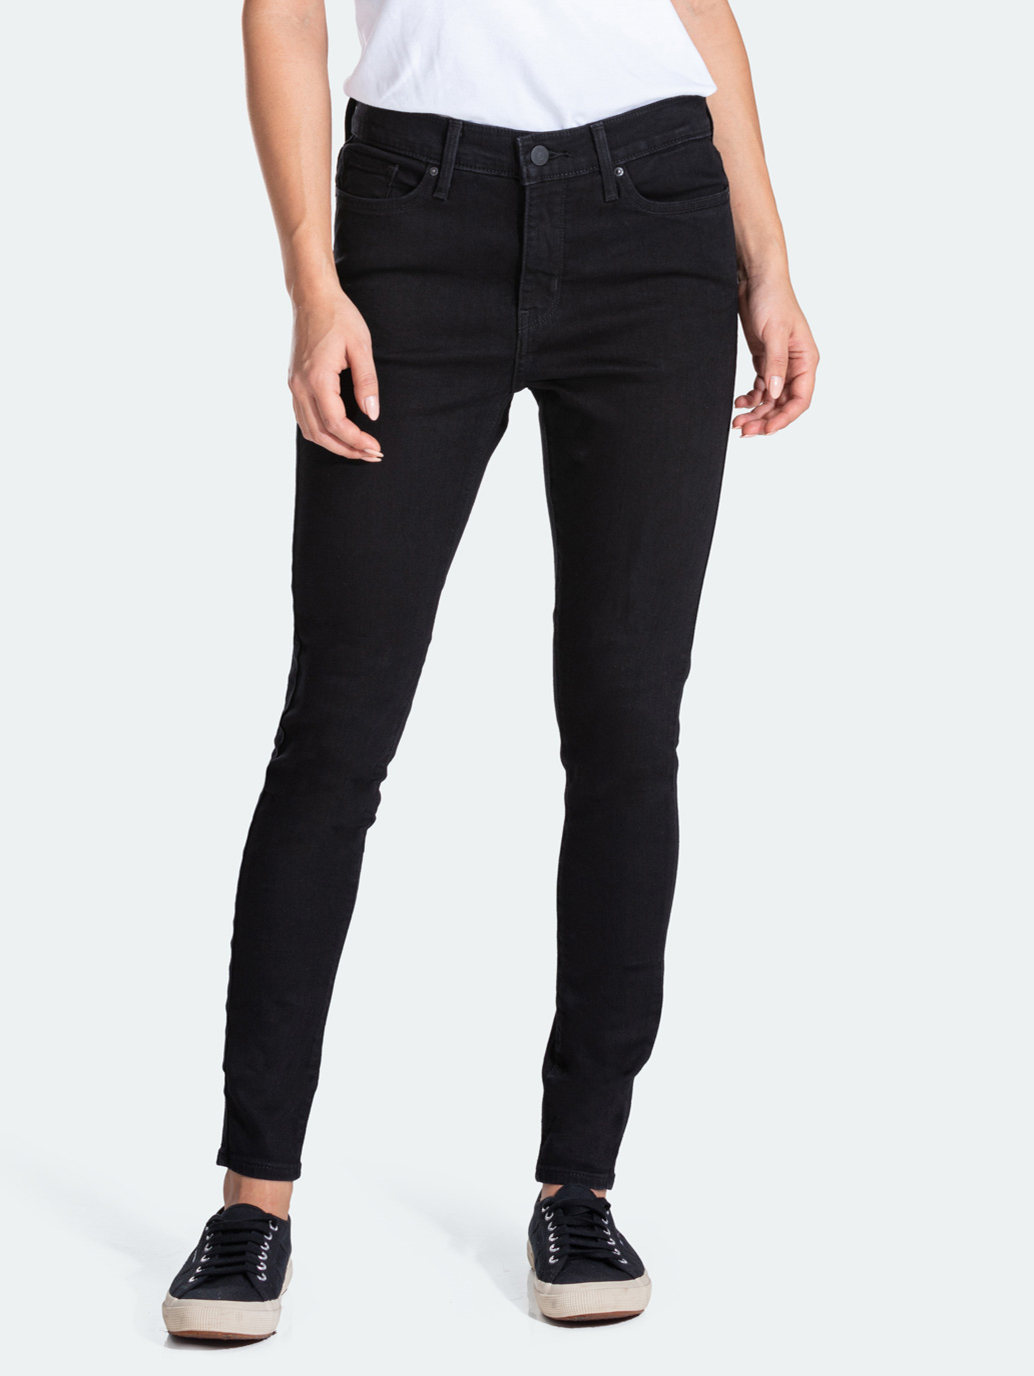 Introducir 72+ imagen levi’s super skinny women’s jeans